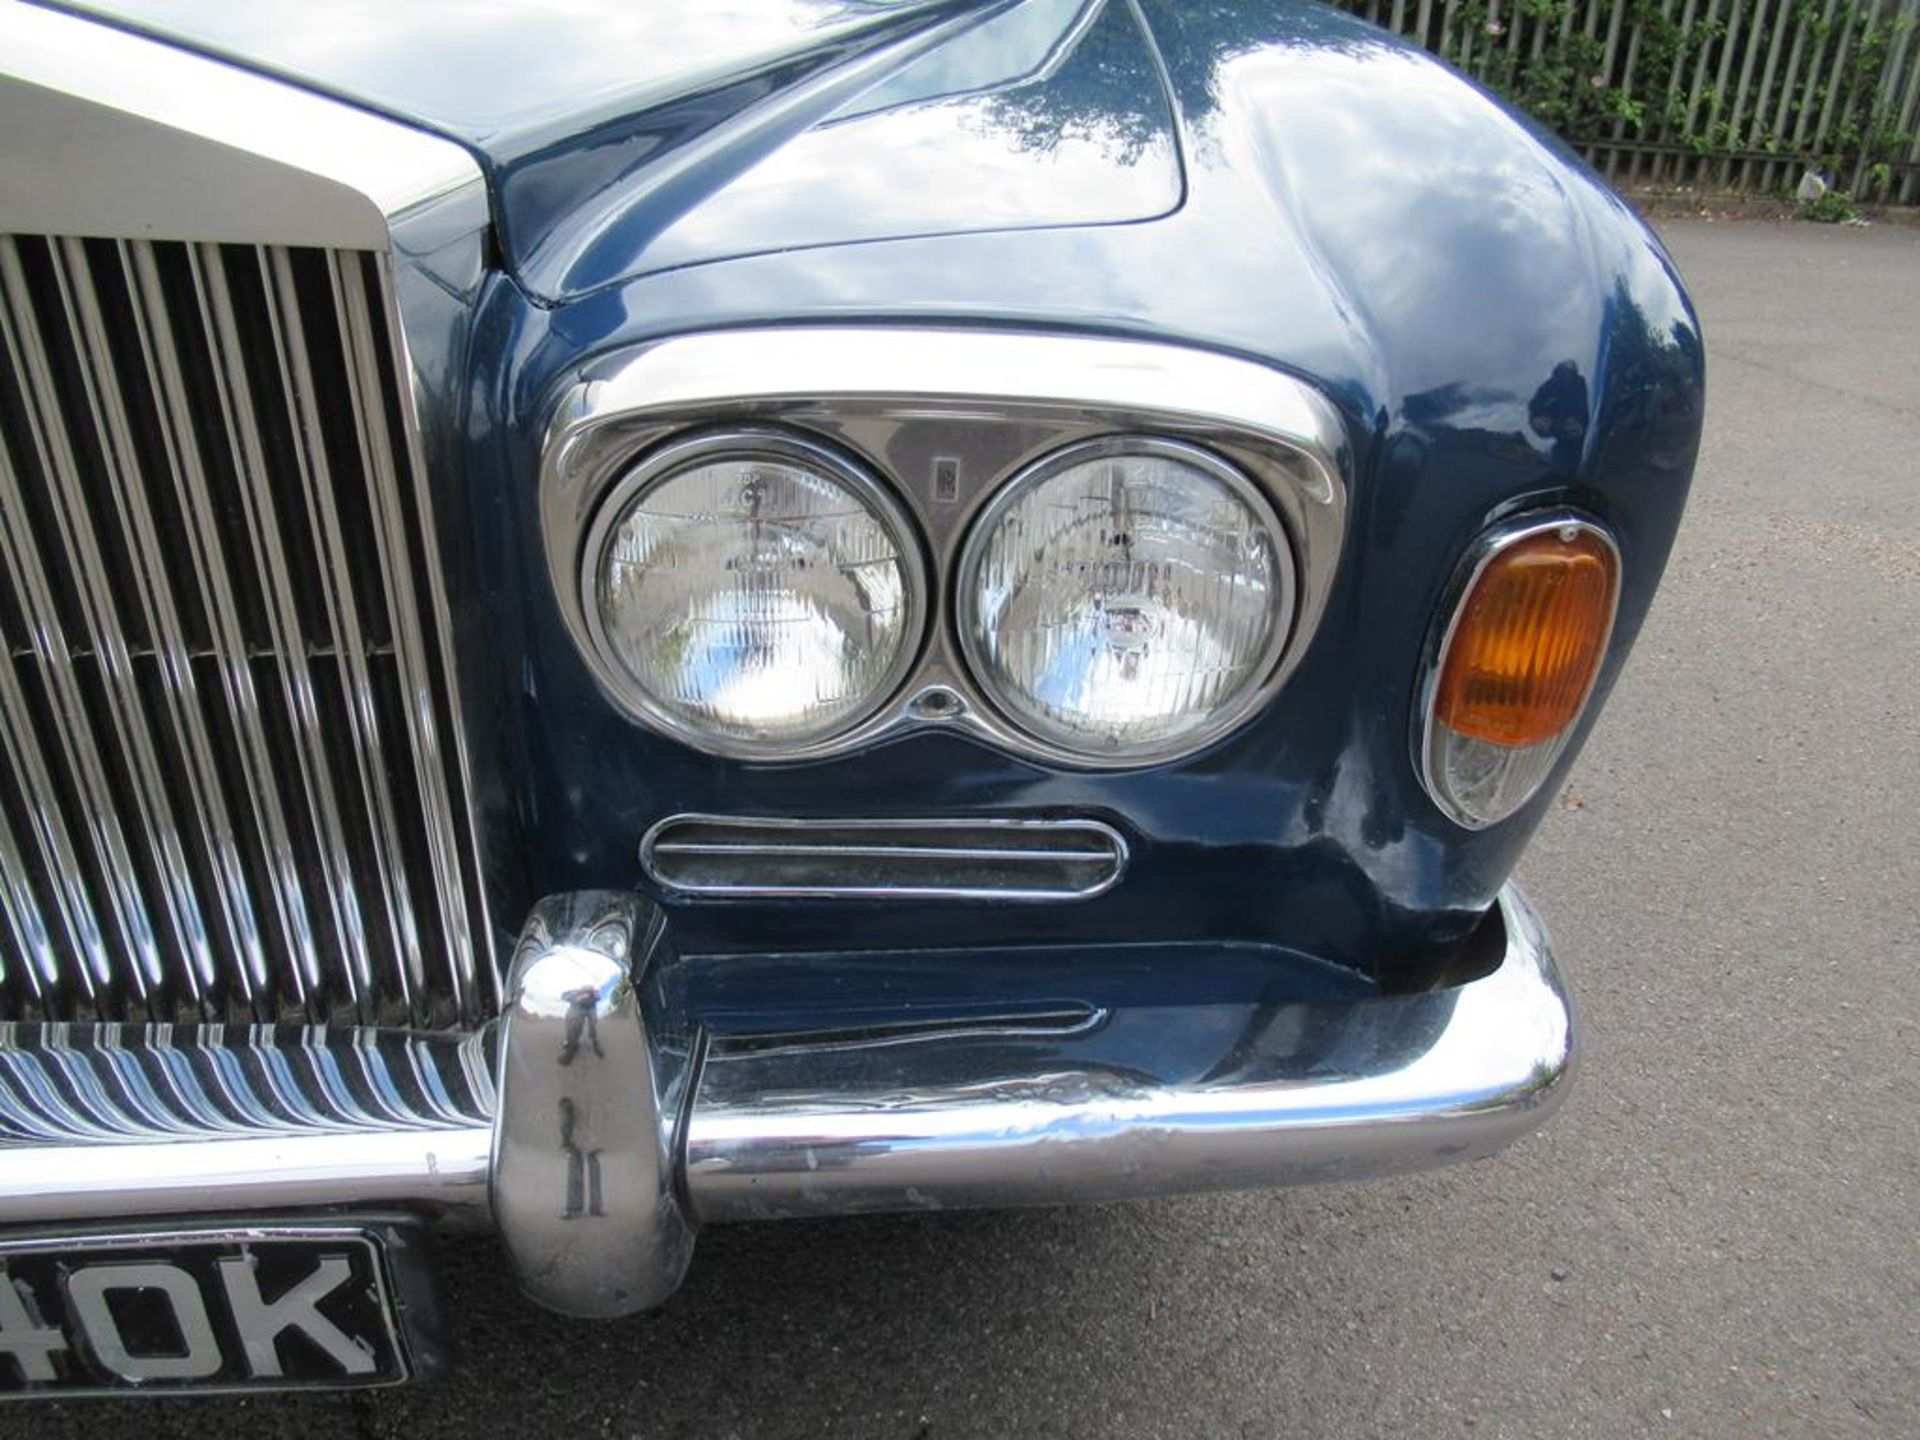 A Rolls Royce Silver Shadow Classic Car - Image 5 of 25